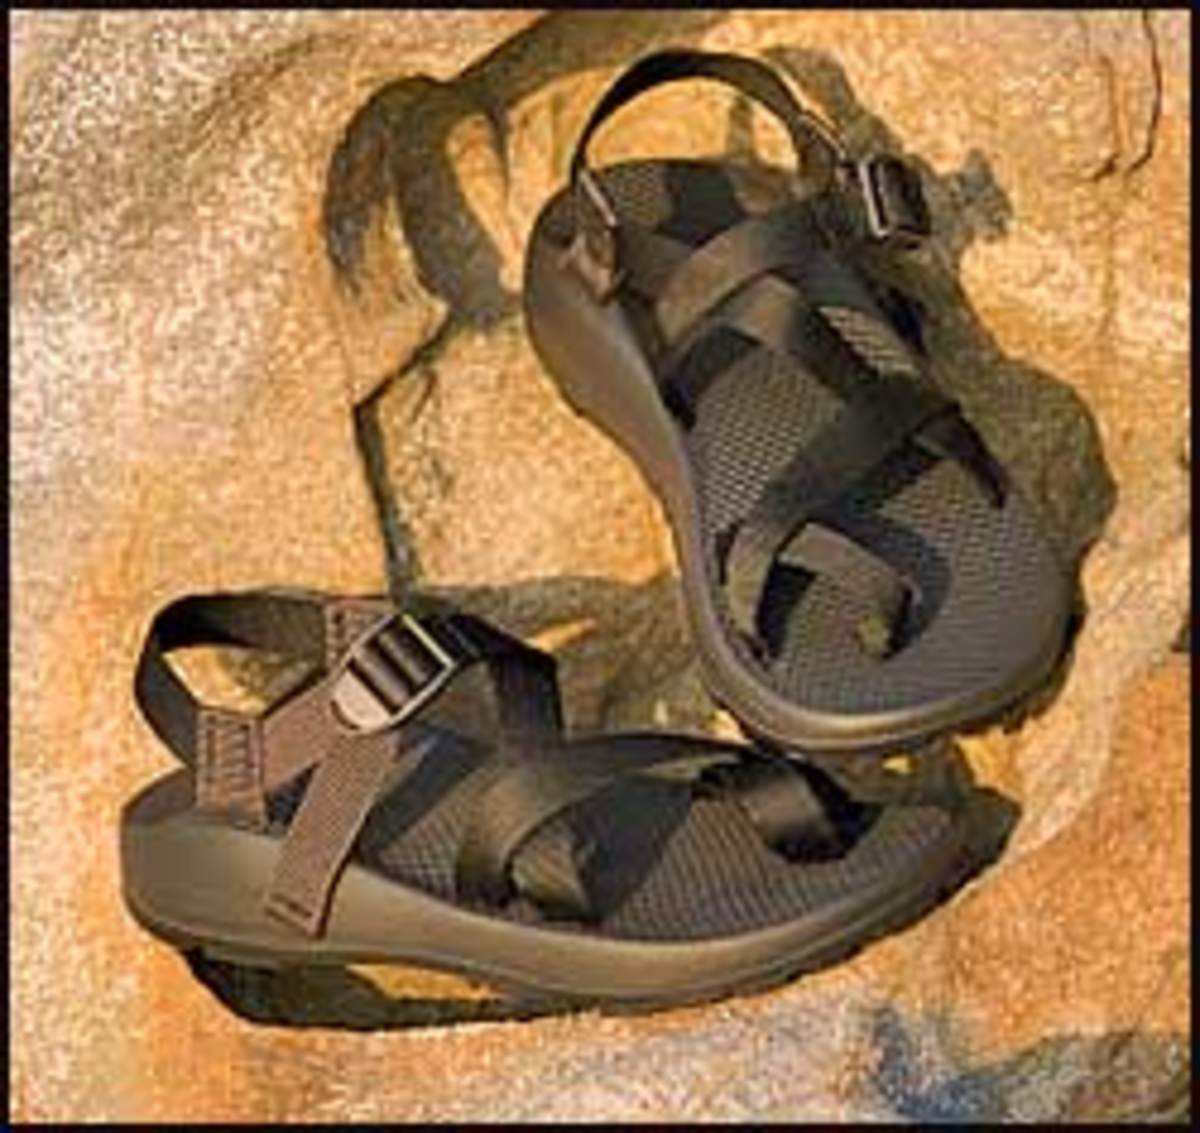 rafting-sandals